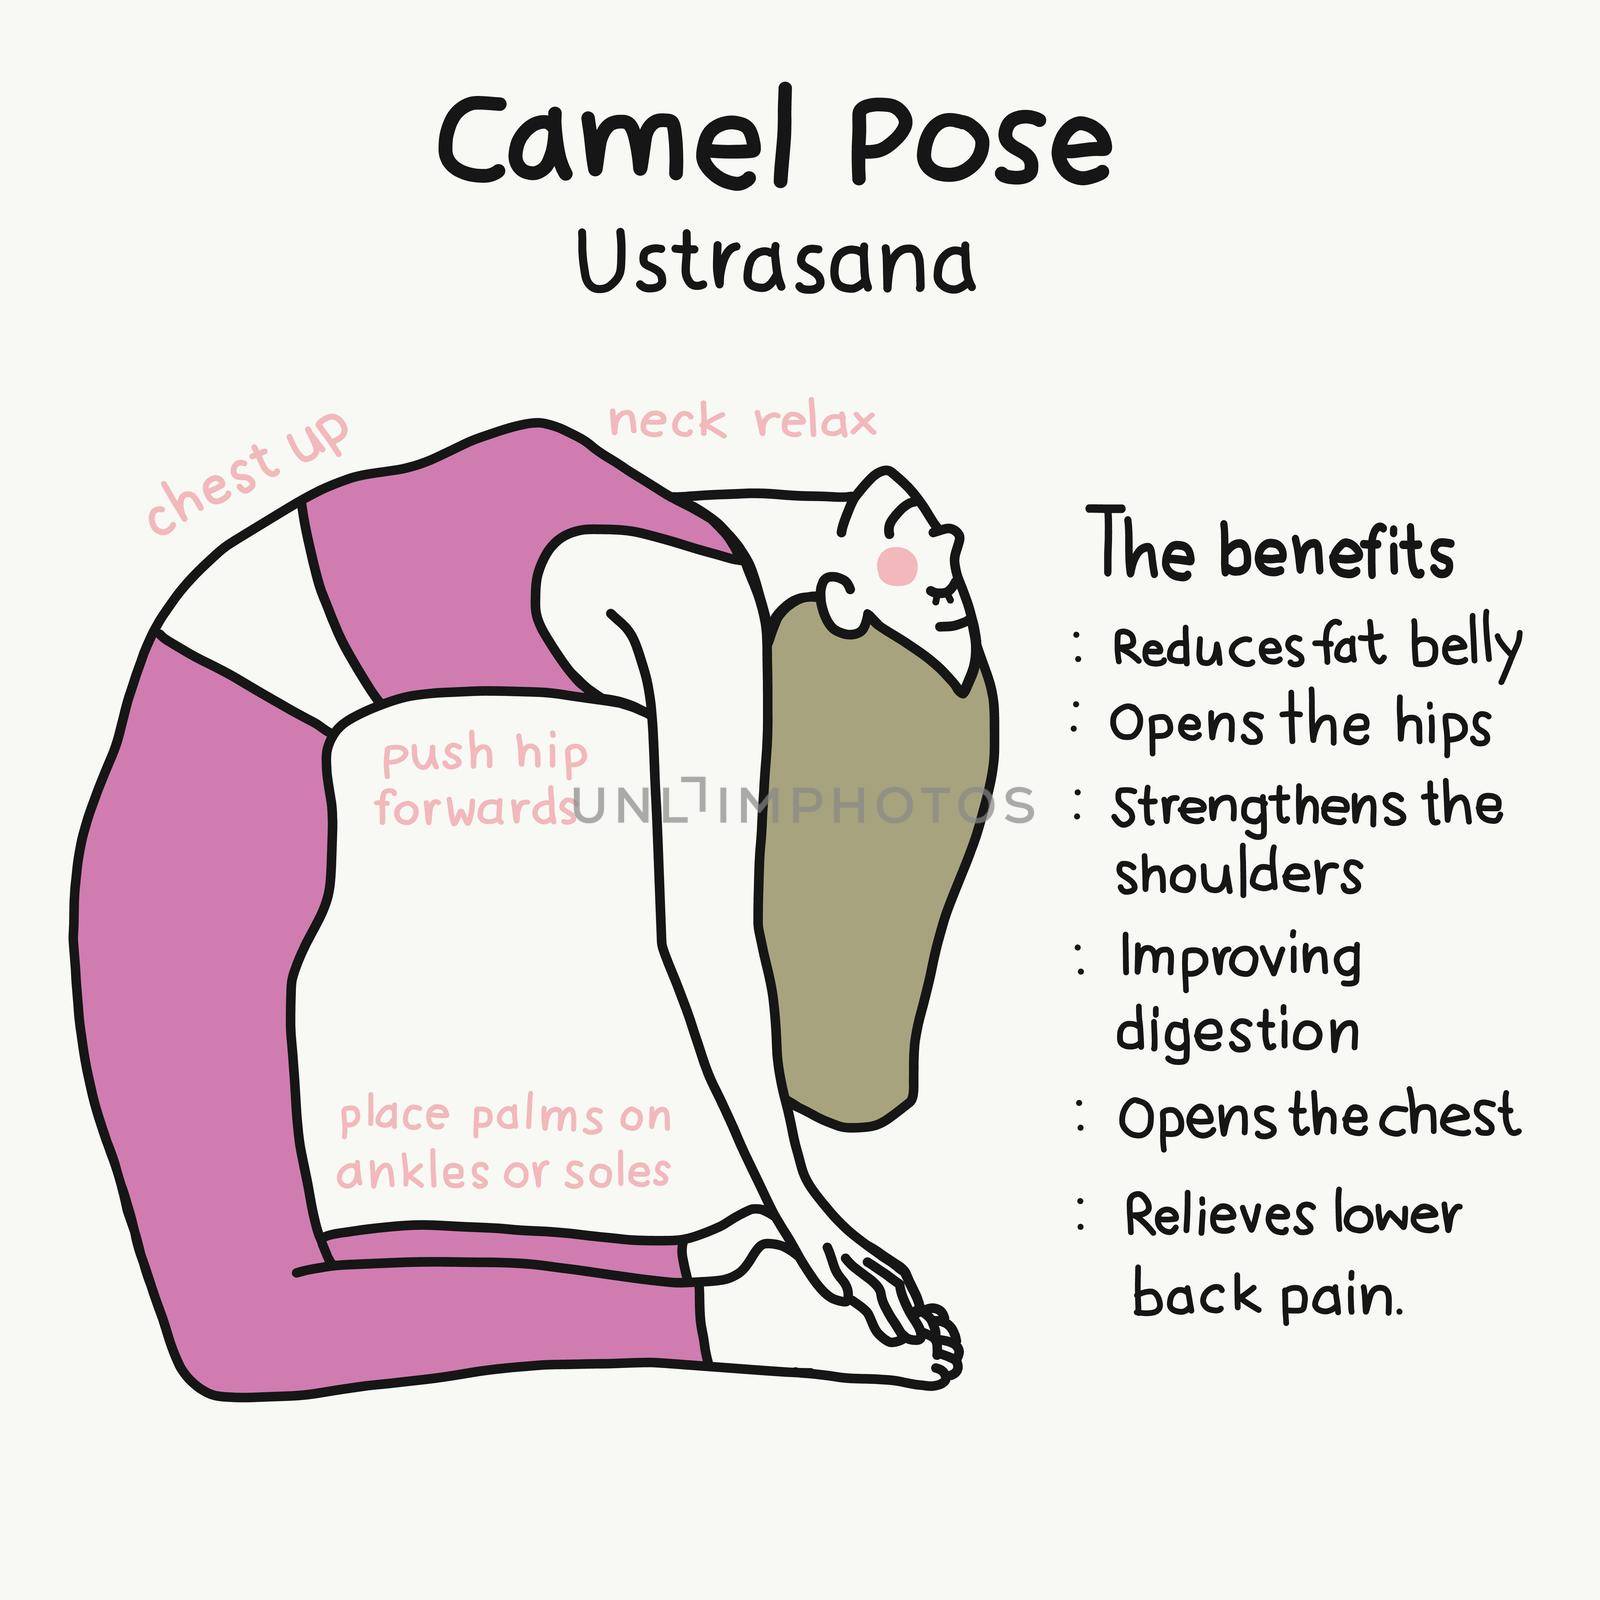 Camel yoga pose and benefits cartoon vector illustration